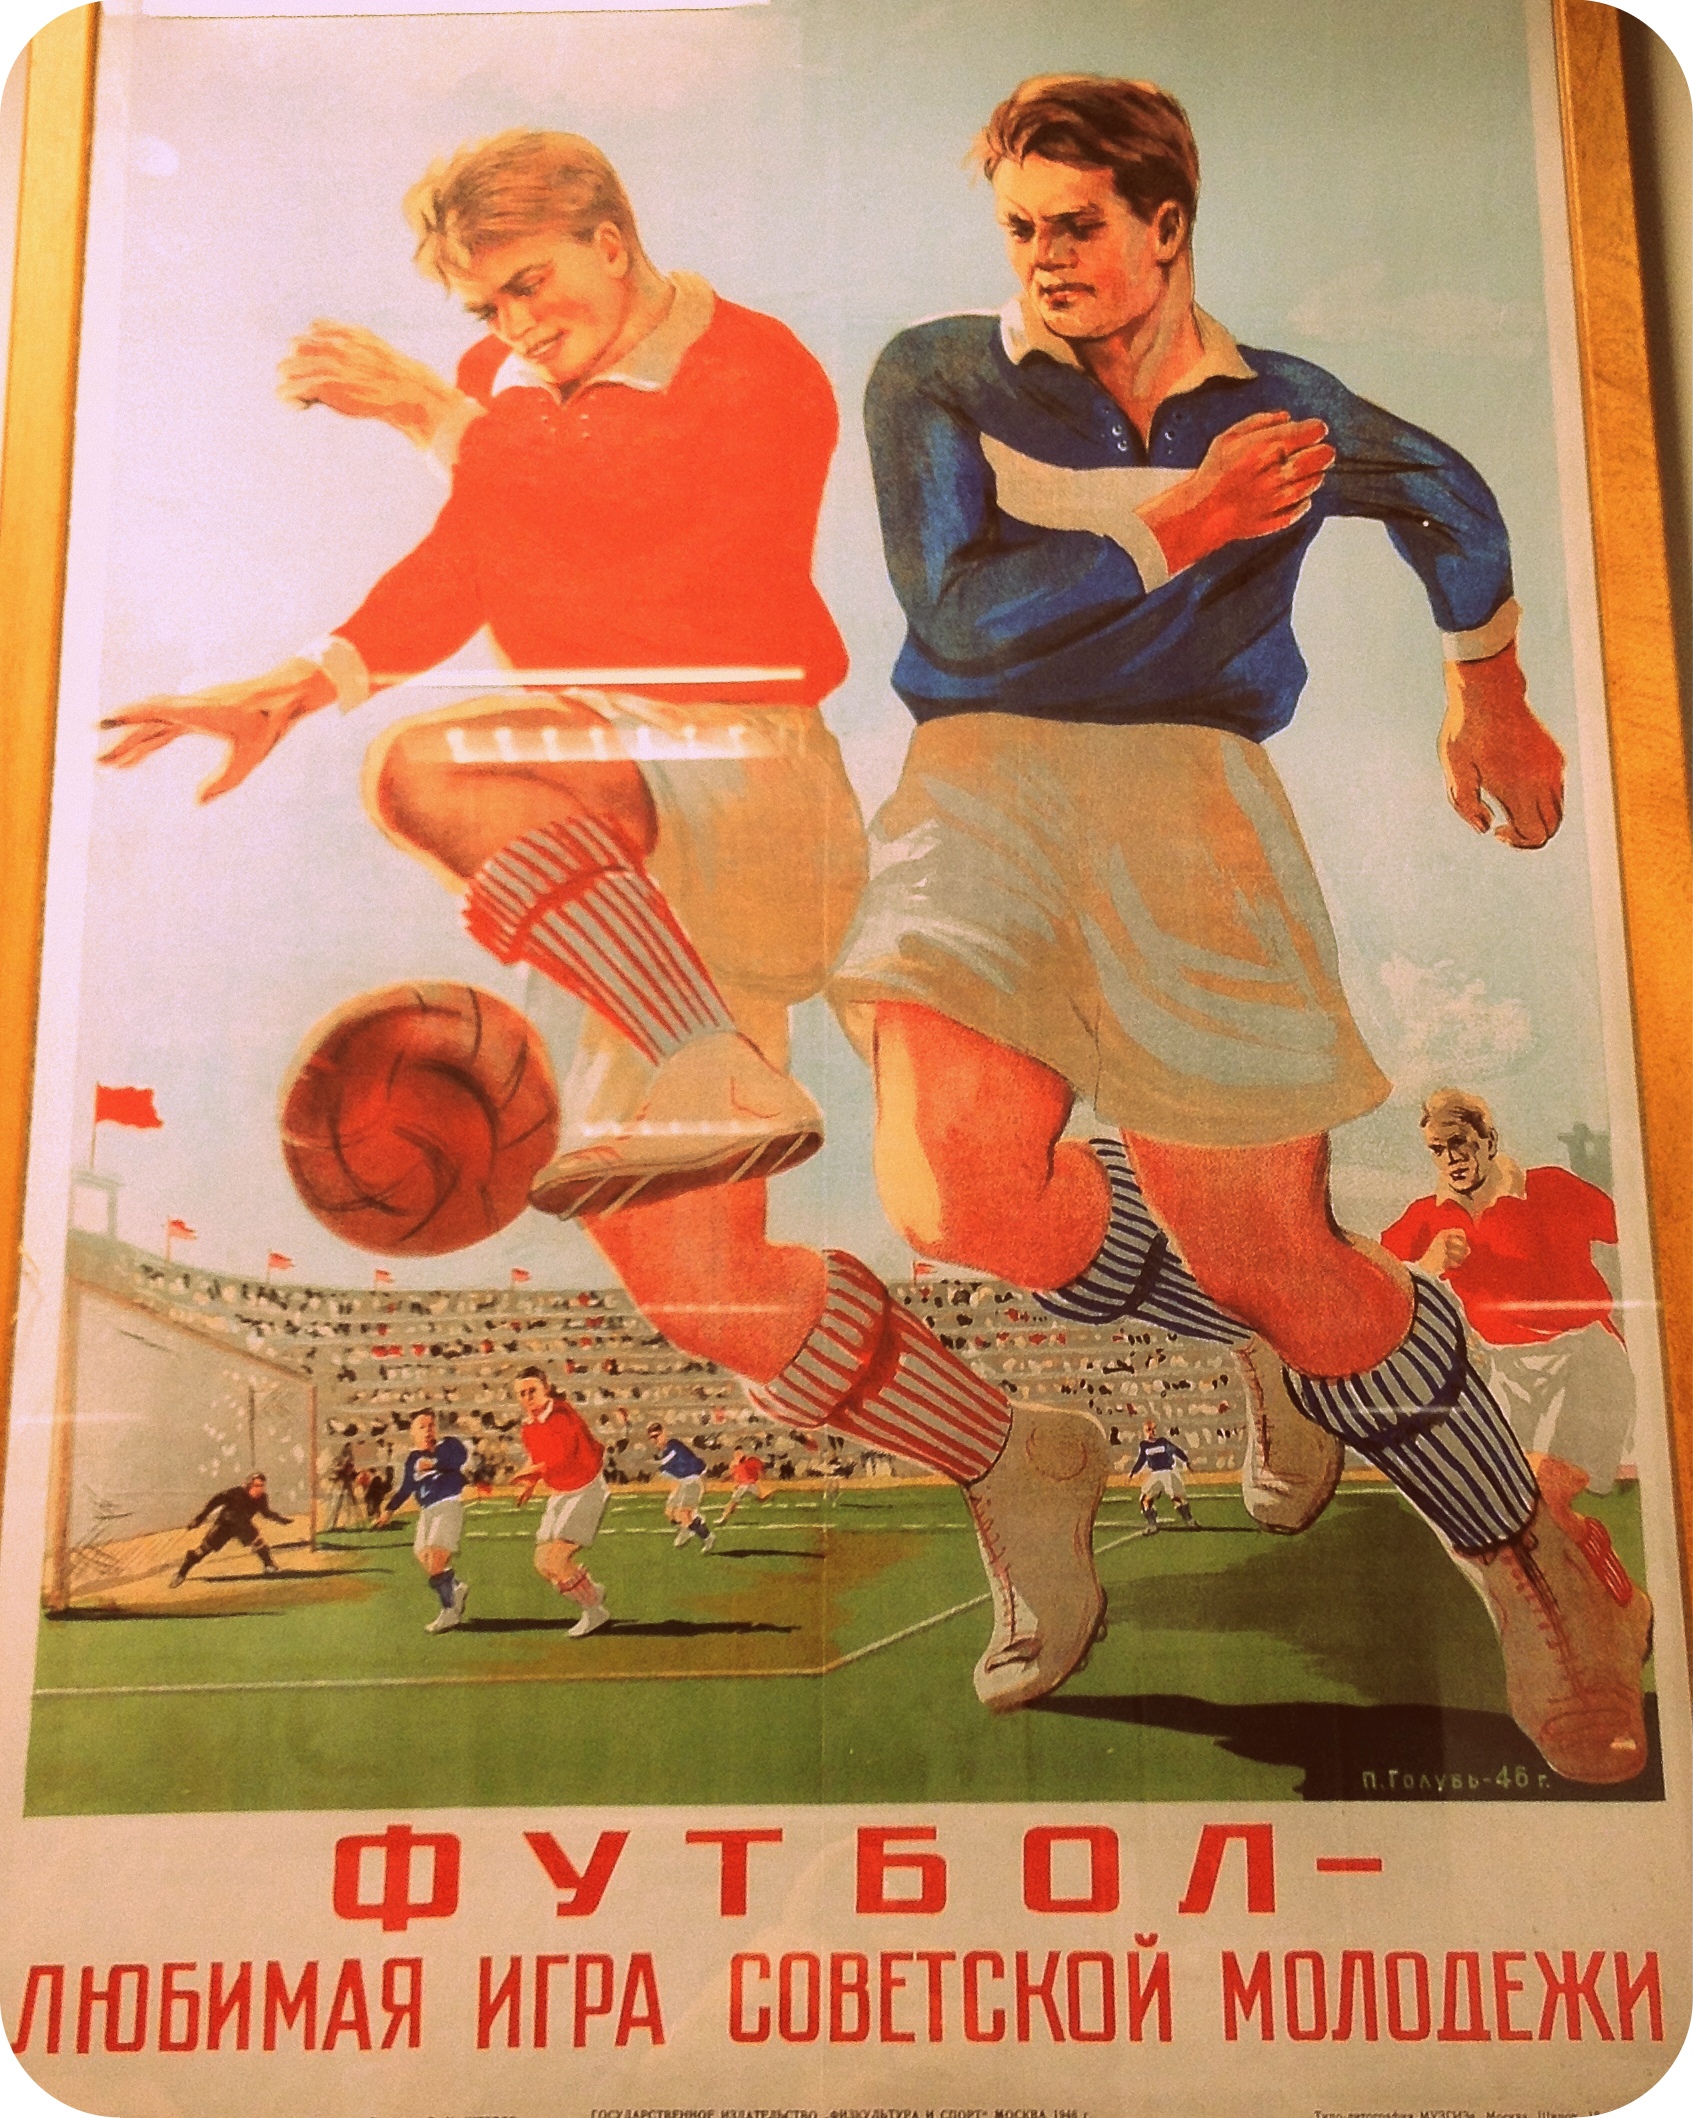 Советский футбол читать. Советские плакаты про спорт. Советские спортивные постеры. Советские футбольные постеры. Советские плакаты про футбол.